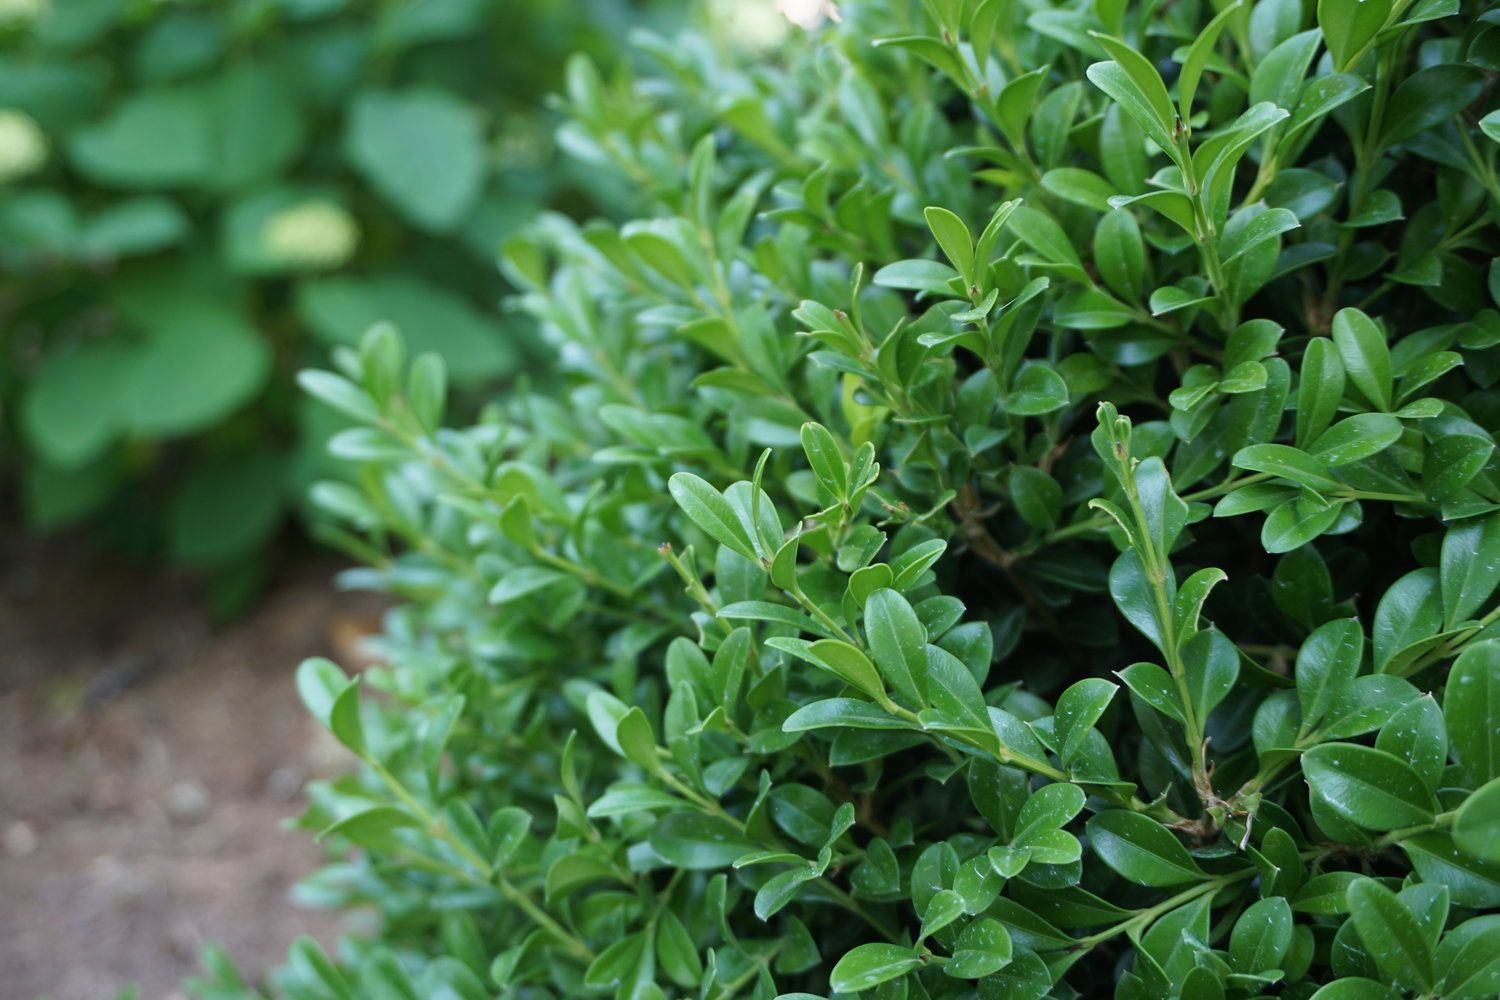 Buxus NewGen Independence  Boxwood shrub evergreen bush for sale in Lebanon